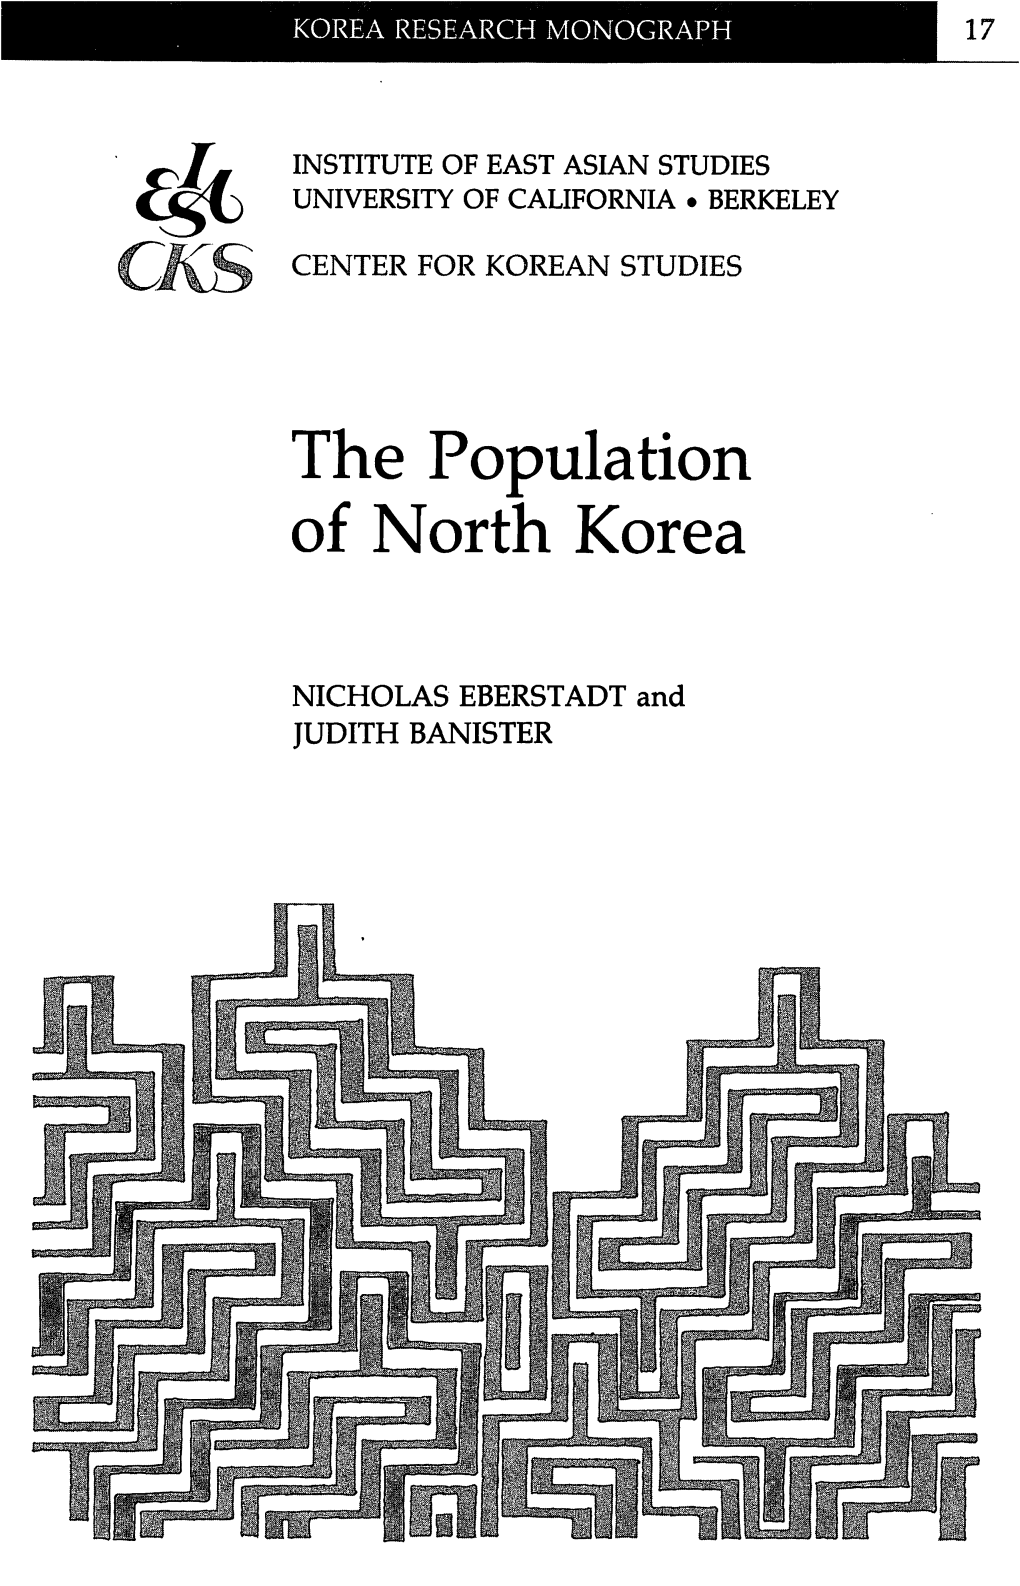 The Population of North Korea